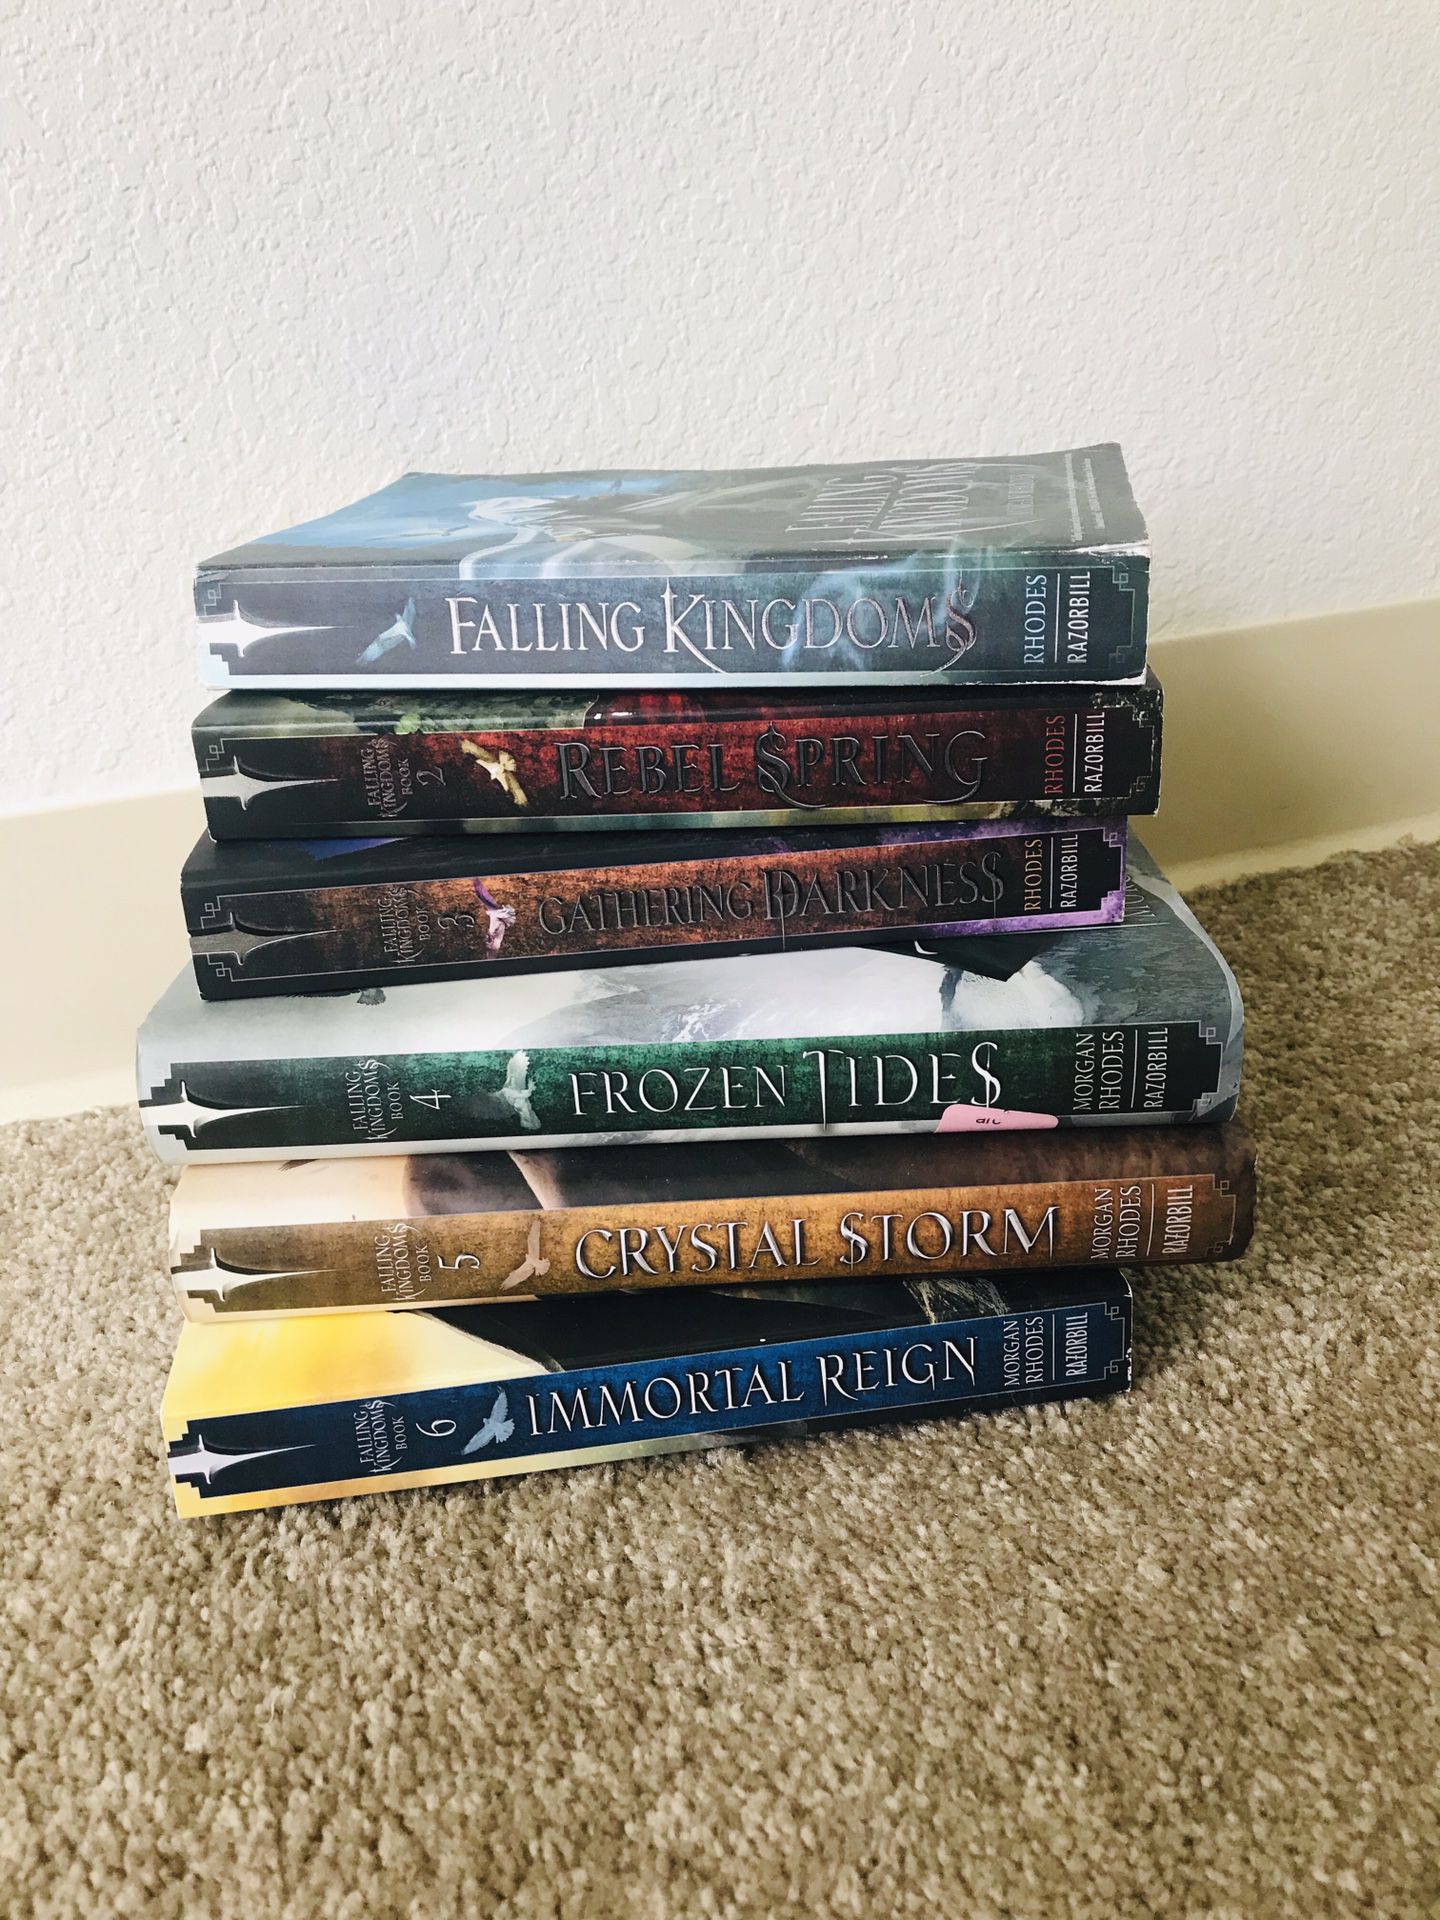 The Falling Kingdoms series